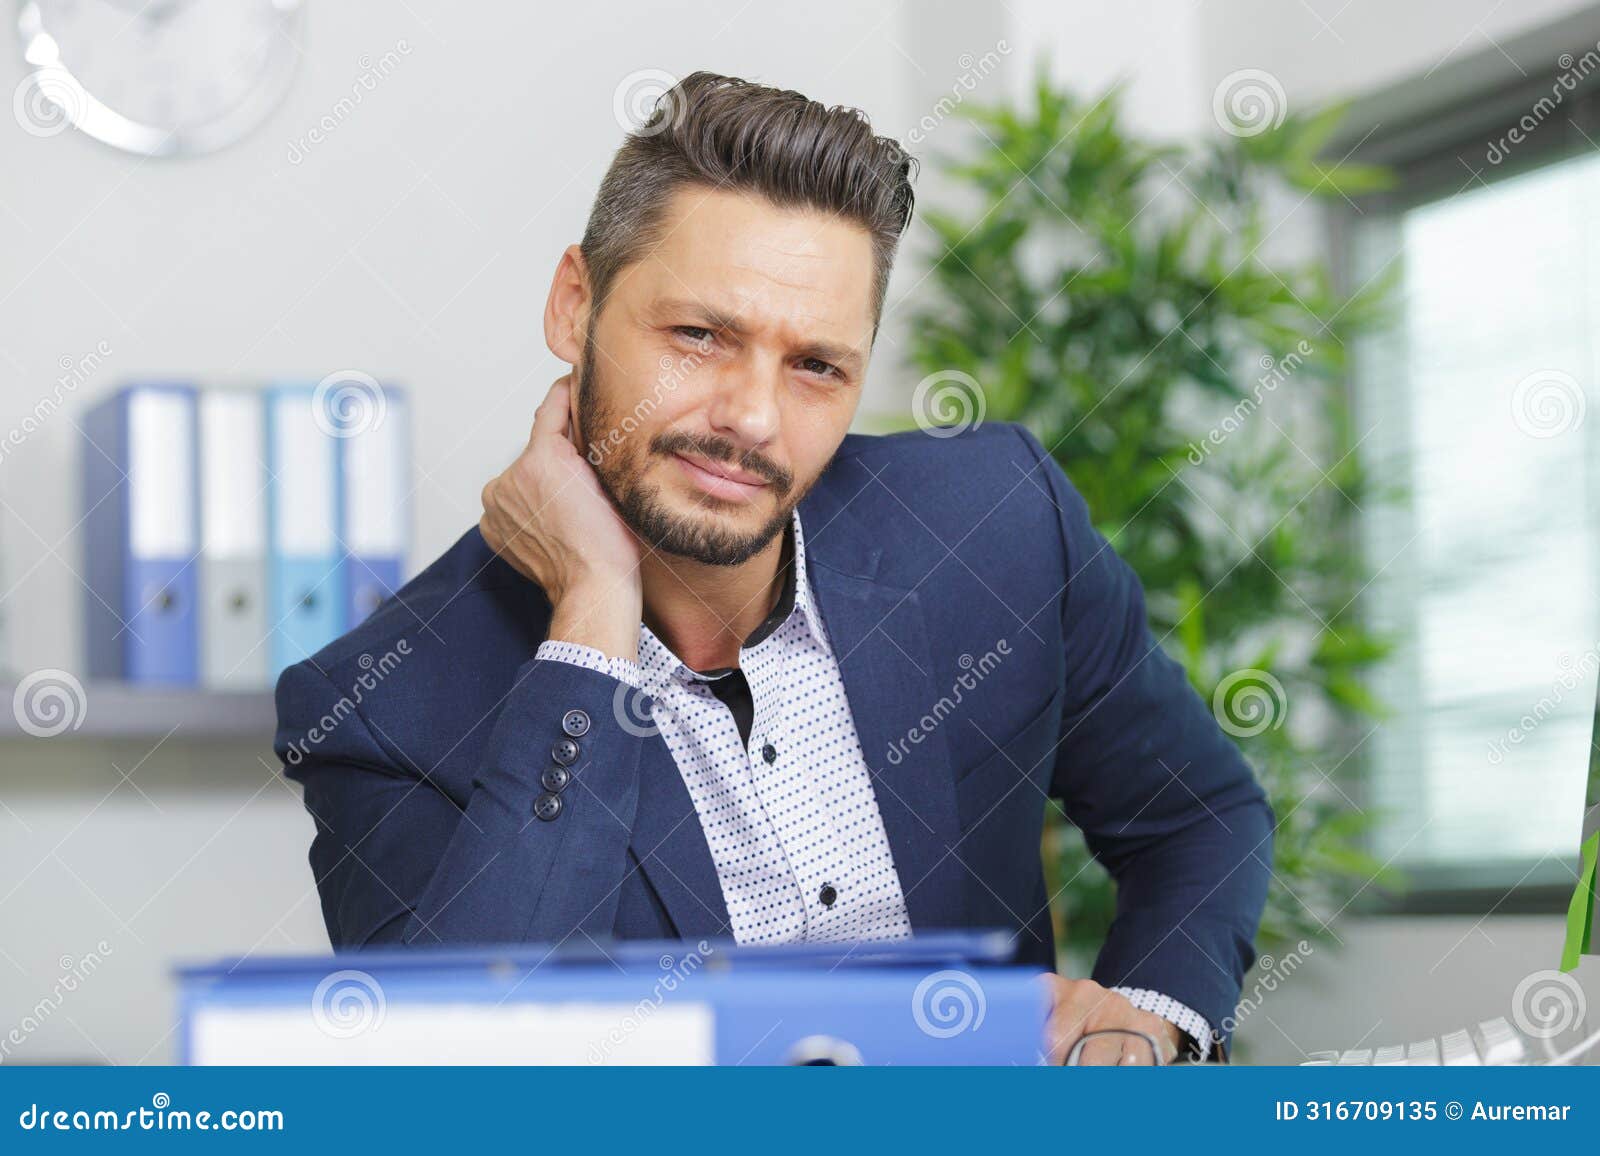 office worker with stiff neck